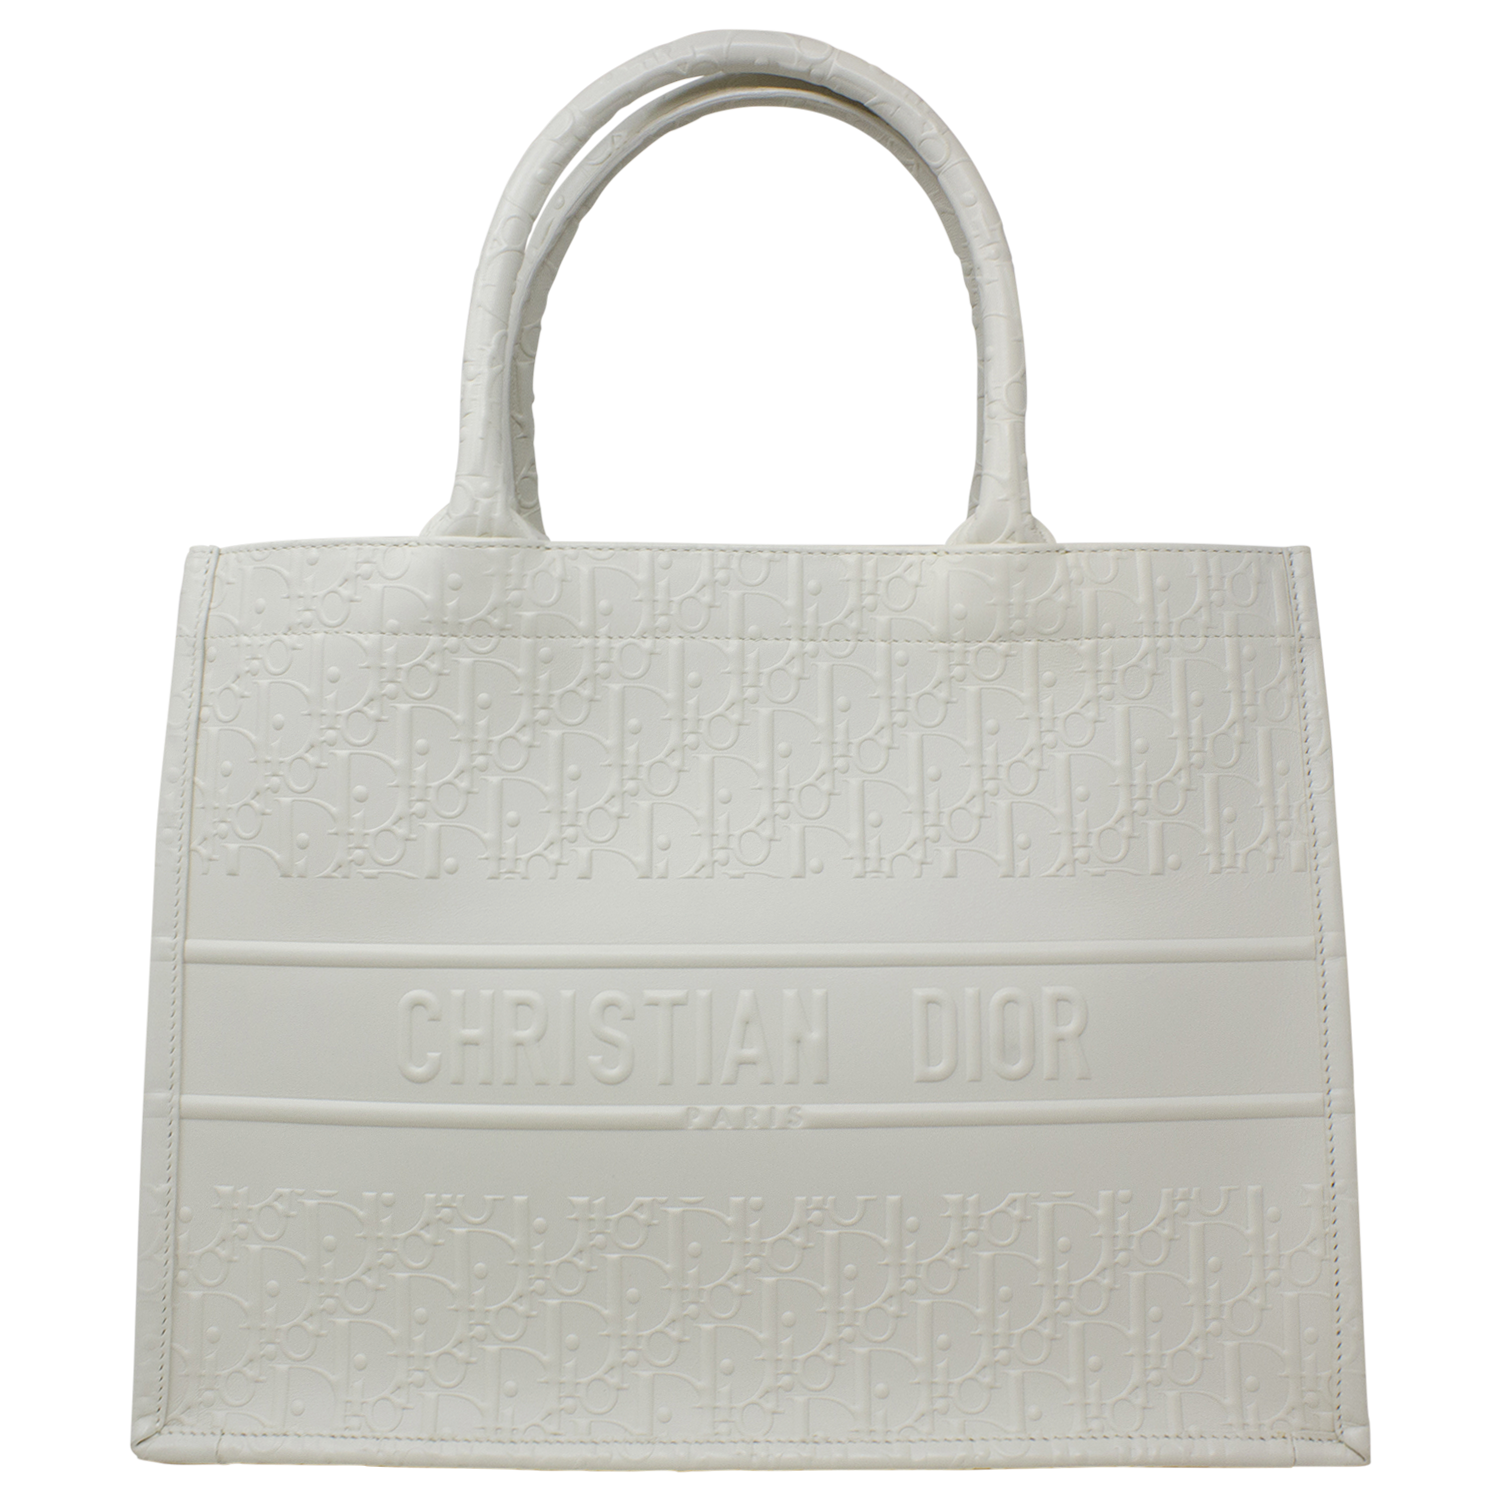 Christian Dior White Leather Book Tote